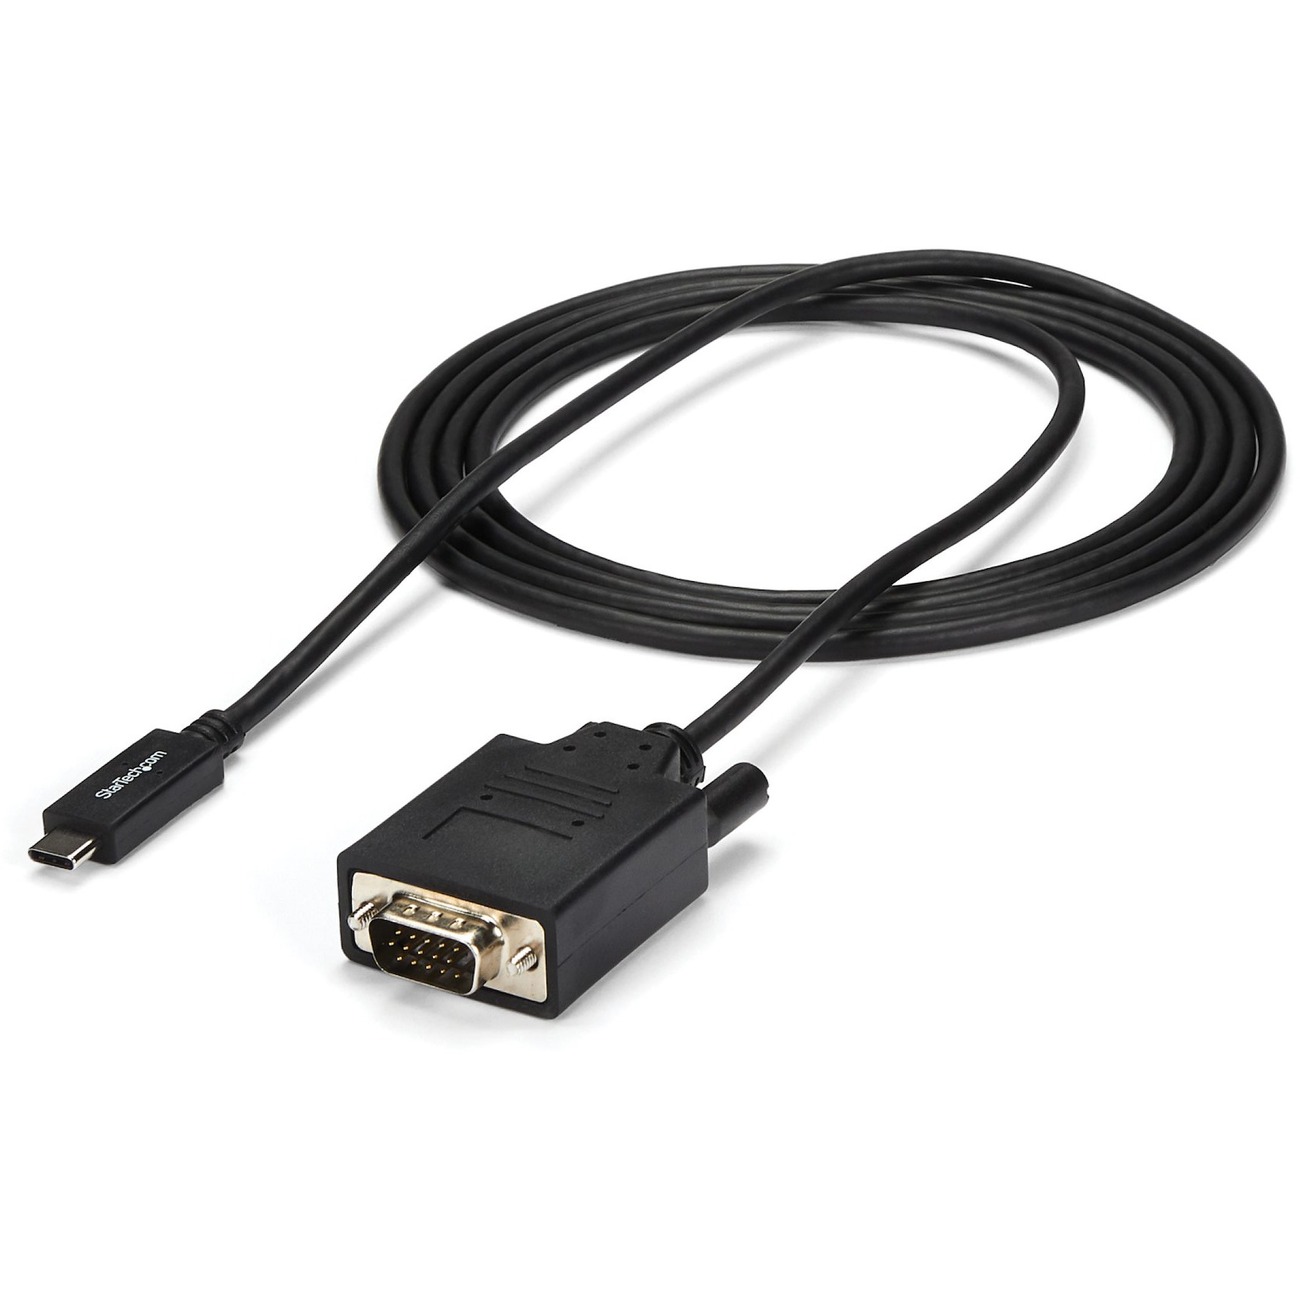 VGA Monitor Cable - 50ft/15m 